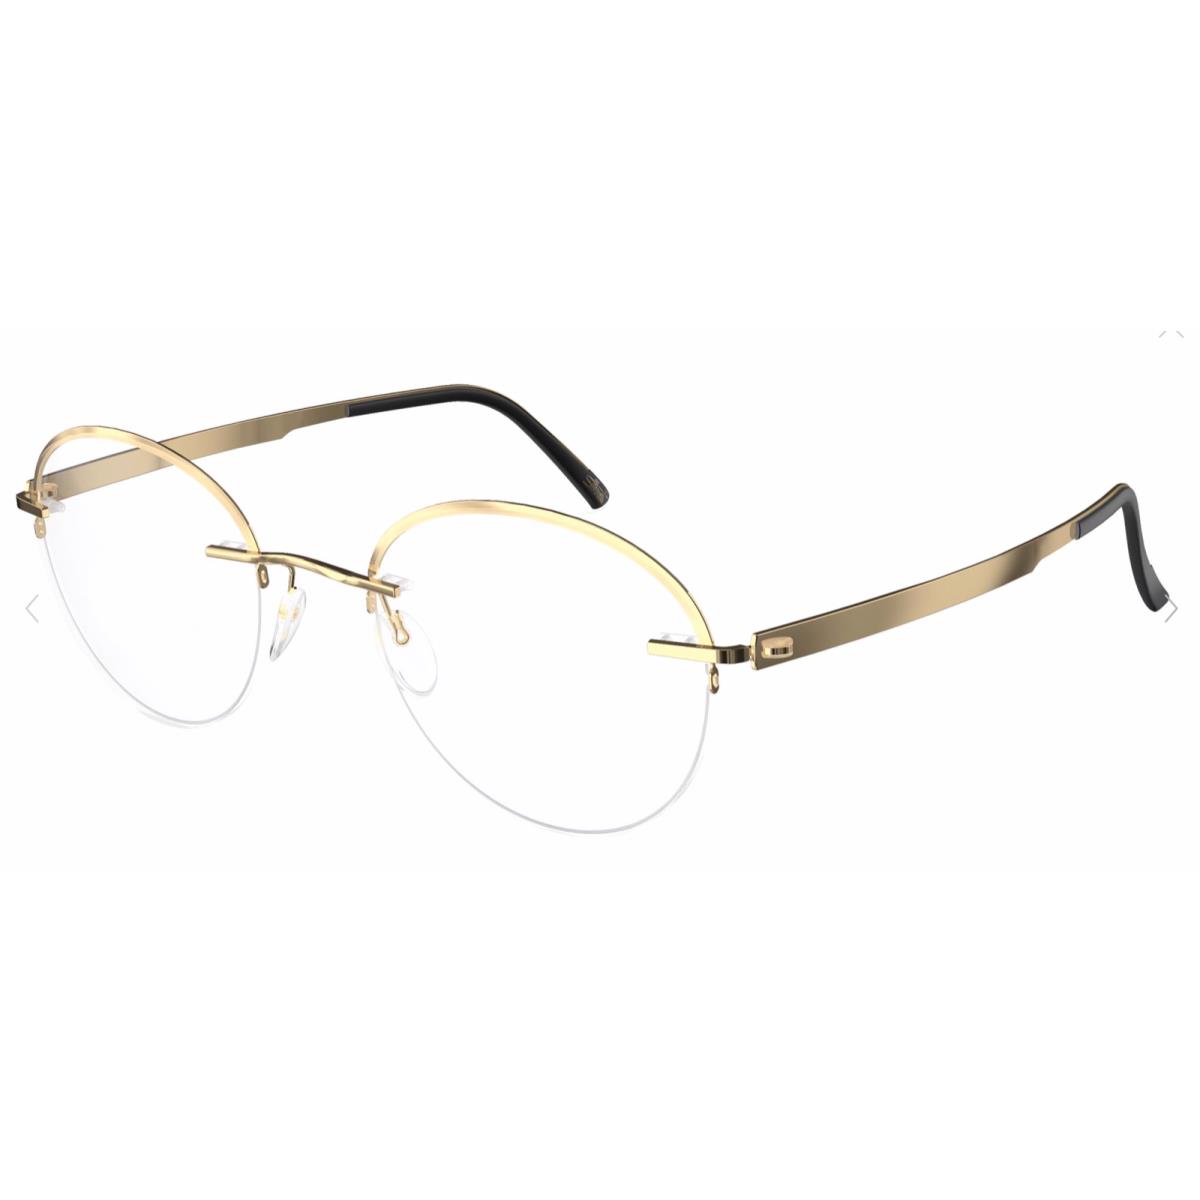 Silhouette Rimless Eyeglasses Artline 5545 JS 7520 48 23kt Gold Plated Frame